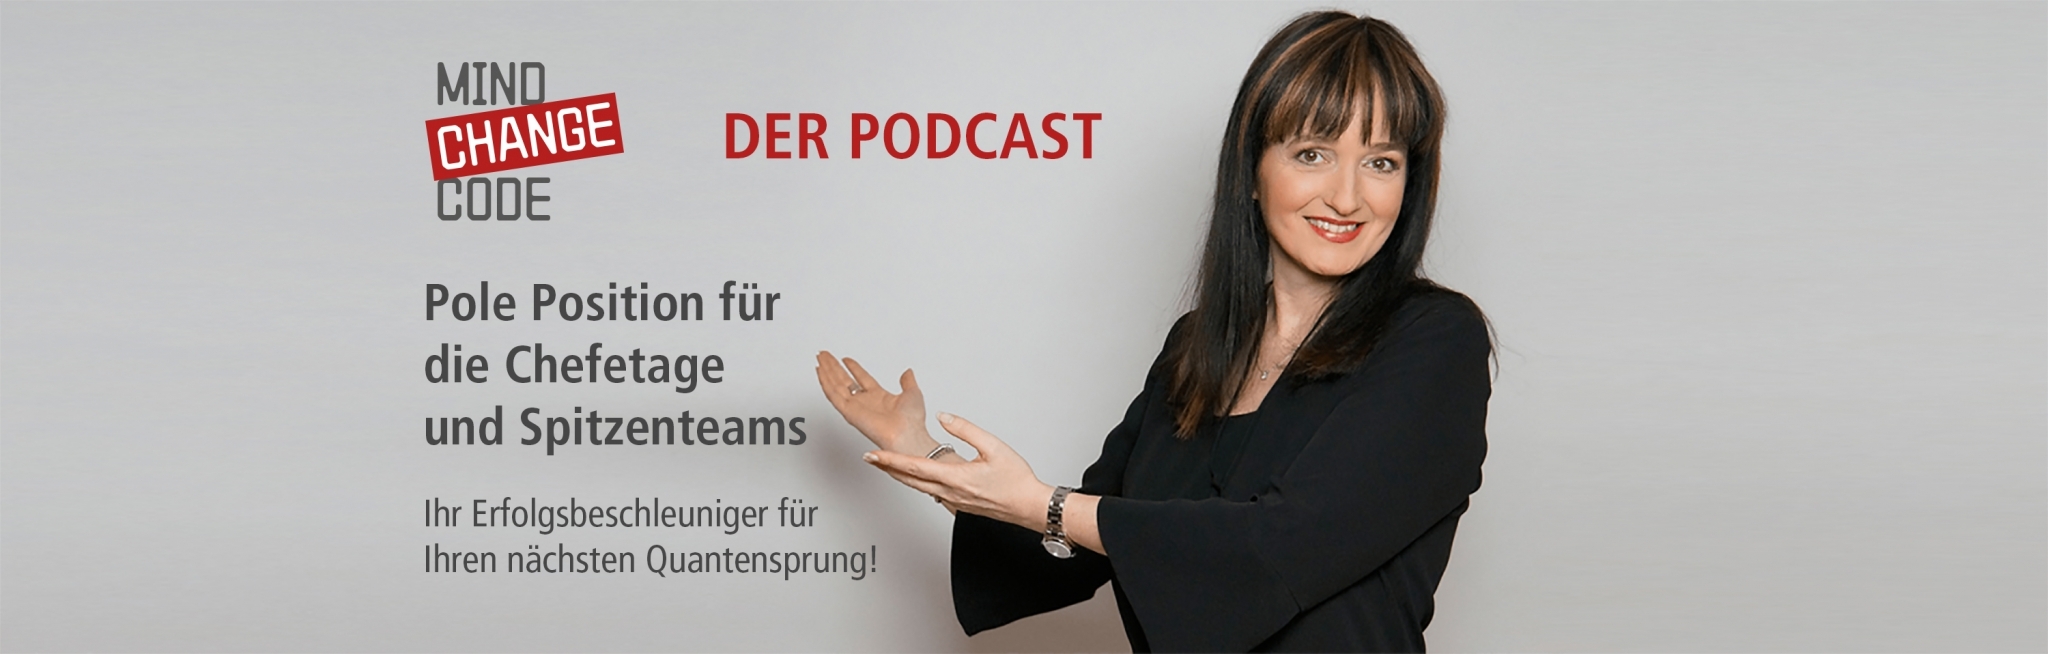 podcast-sabine-oberhardt-mind-change